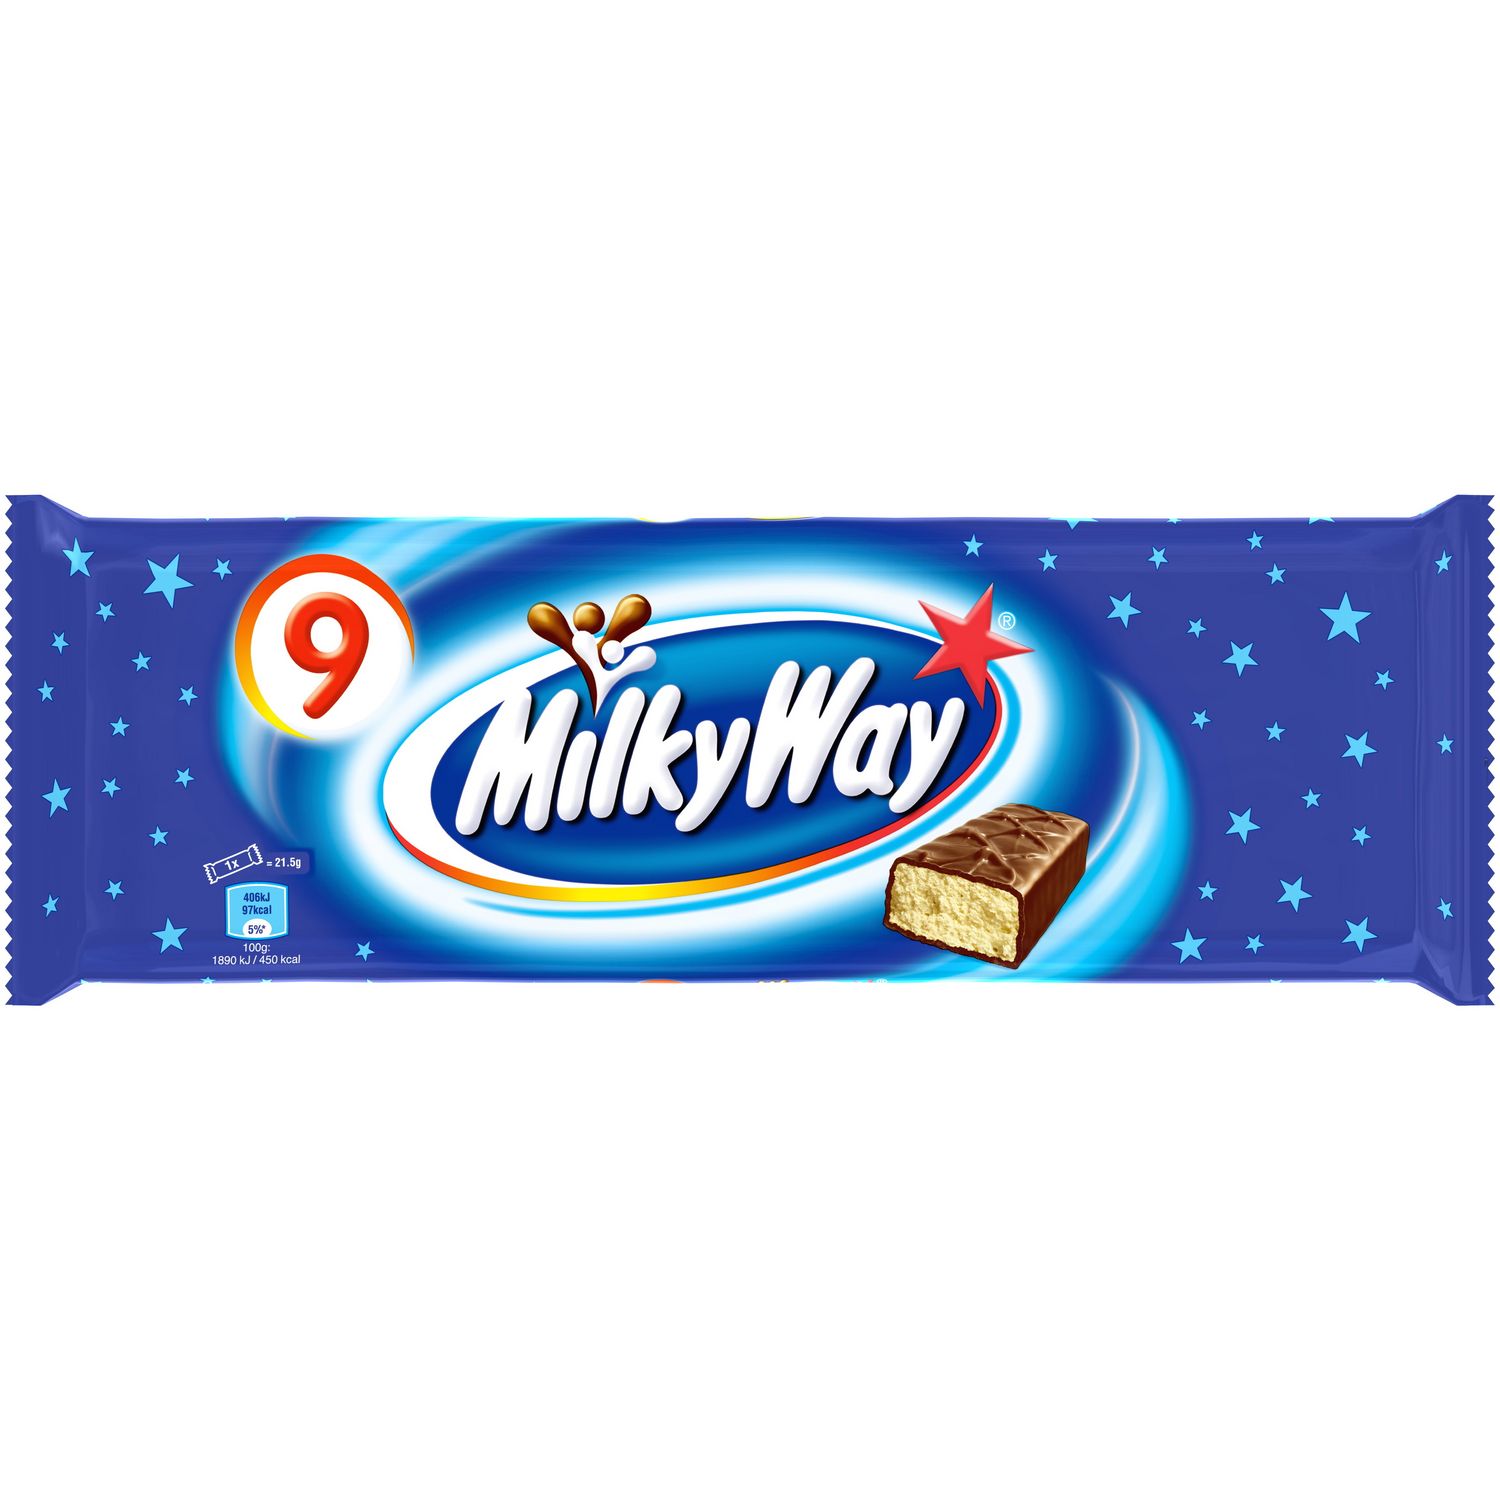 Milky Way Chocolat chaud - seulement 2,49 € chez